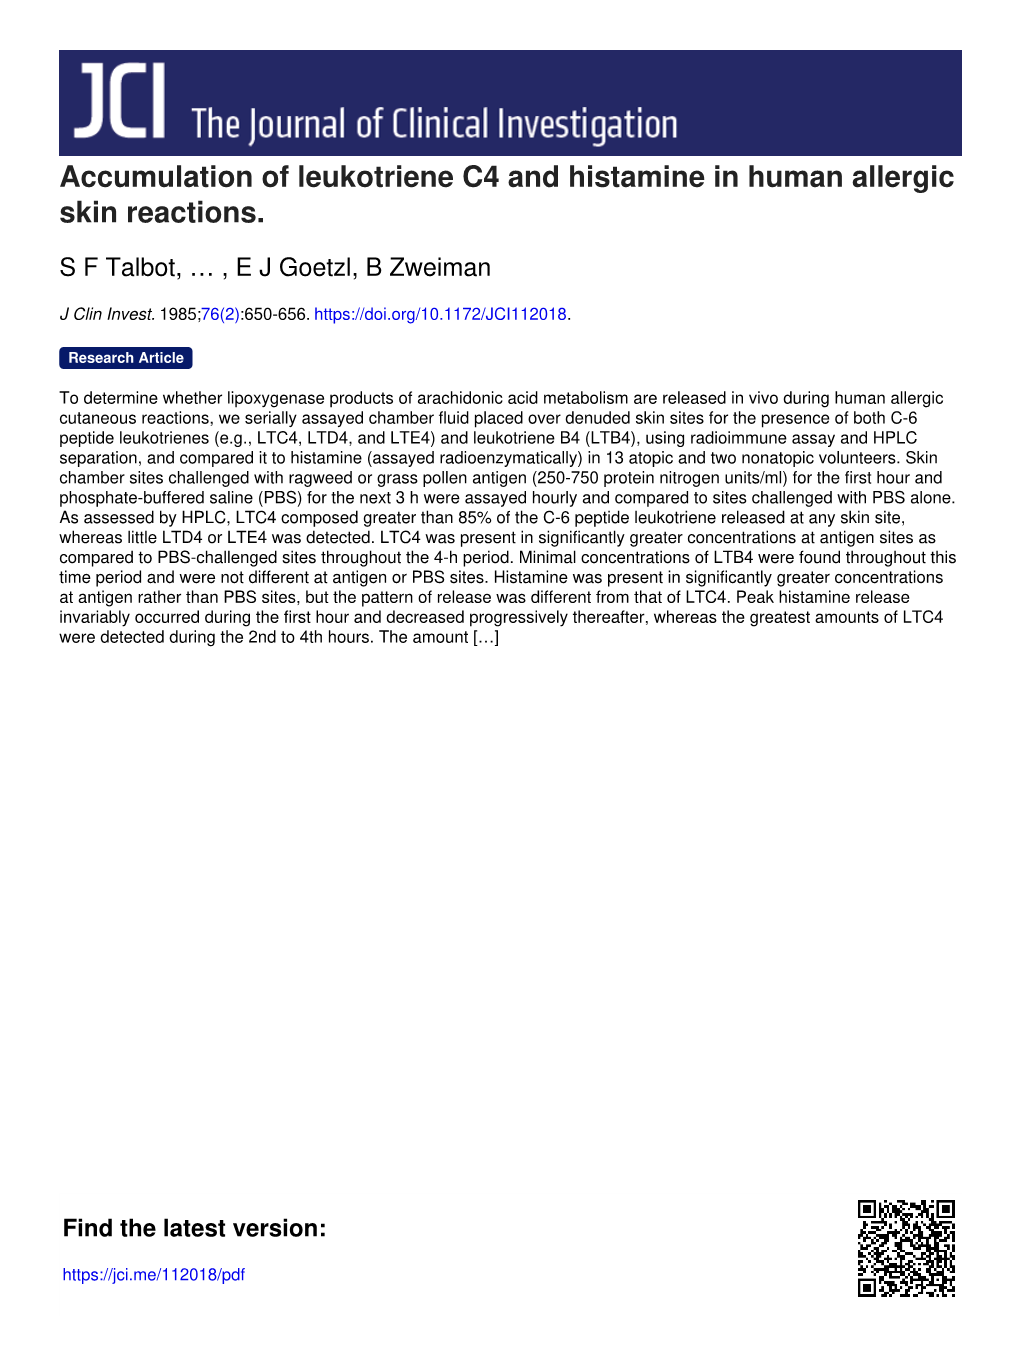 Accumulation of Leukotriene C4 and Histamine in Human Allergic Skin Reactions